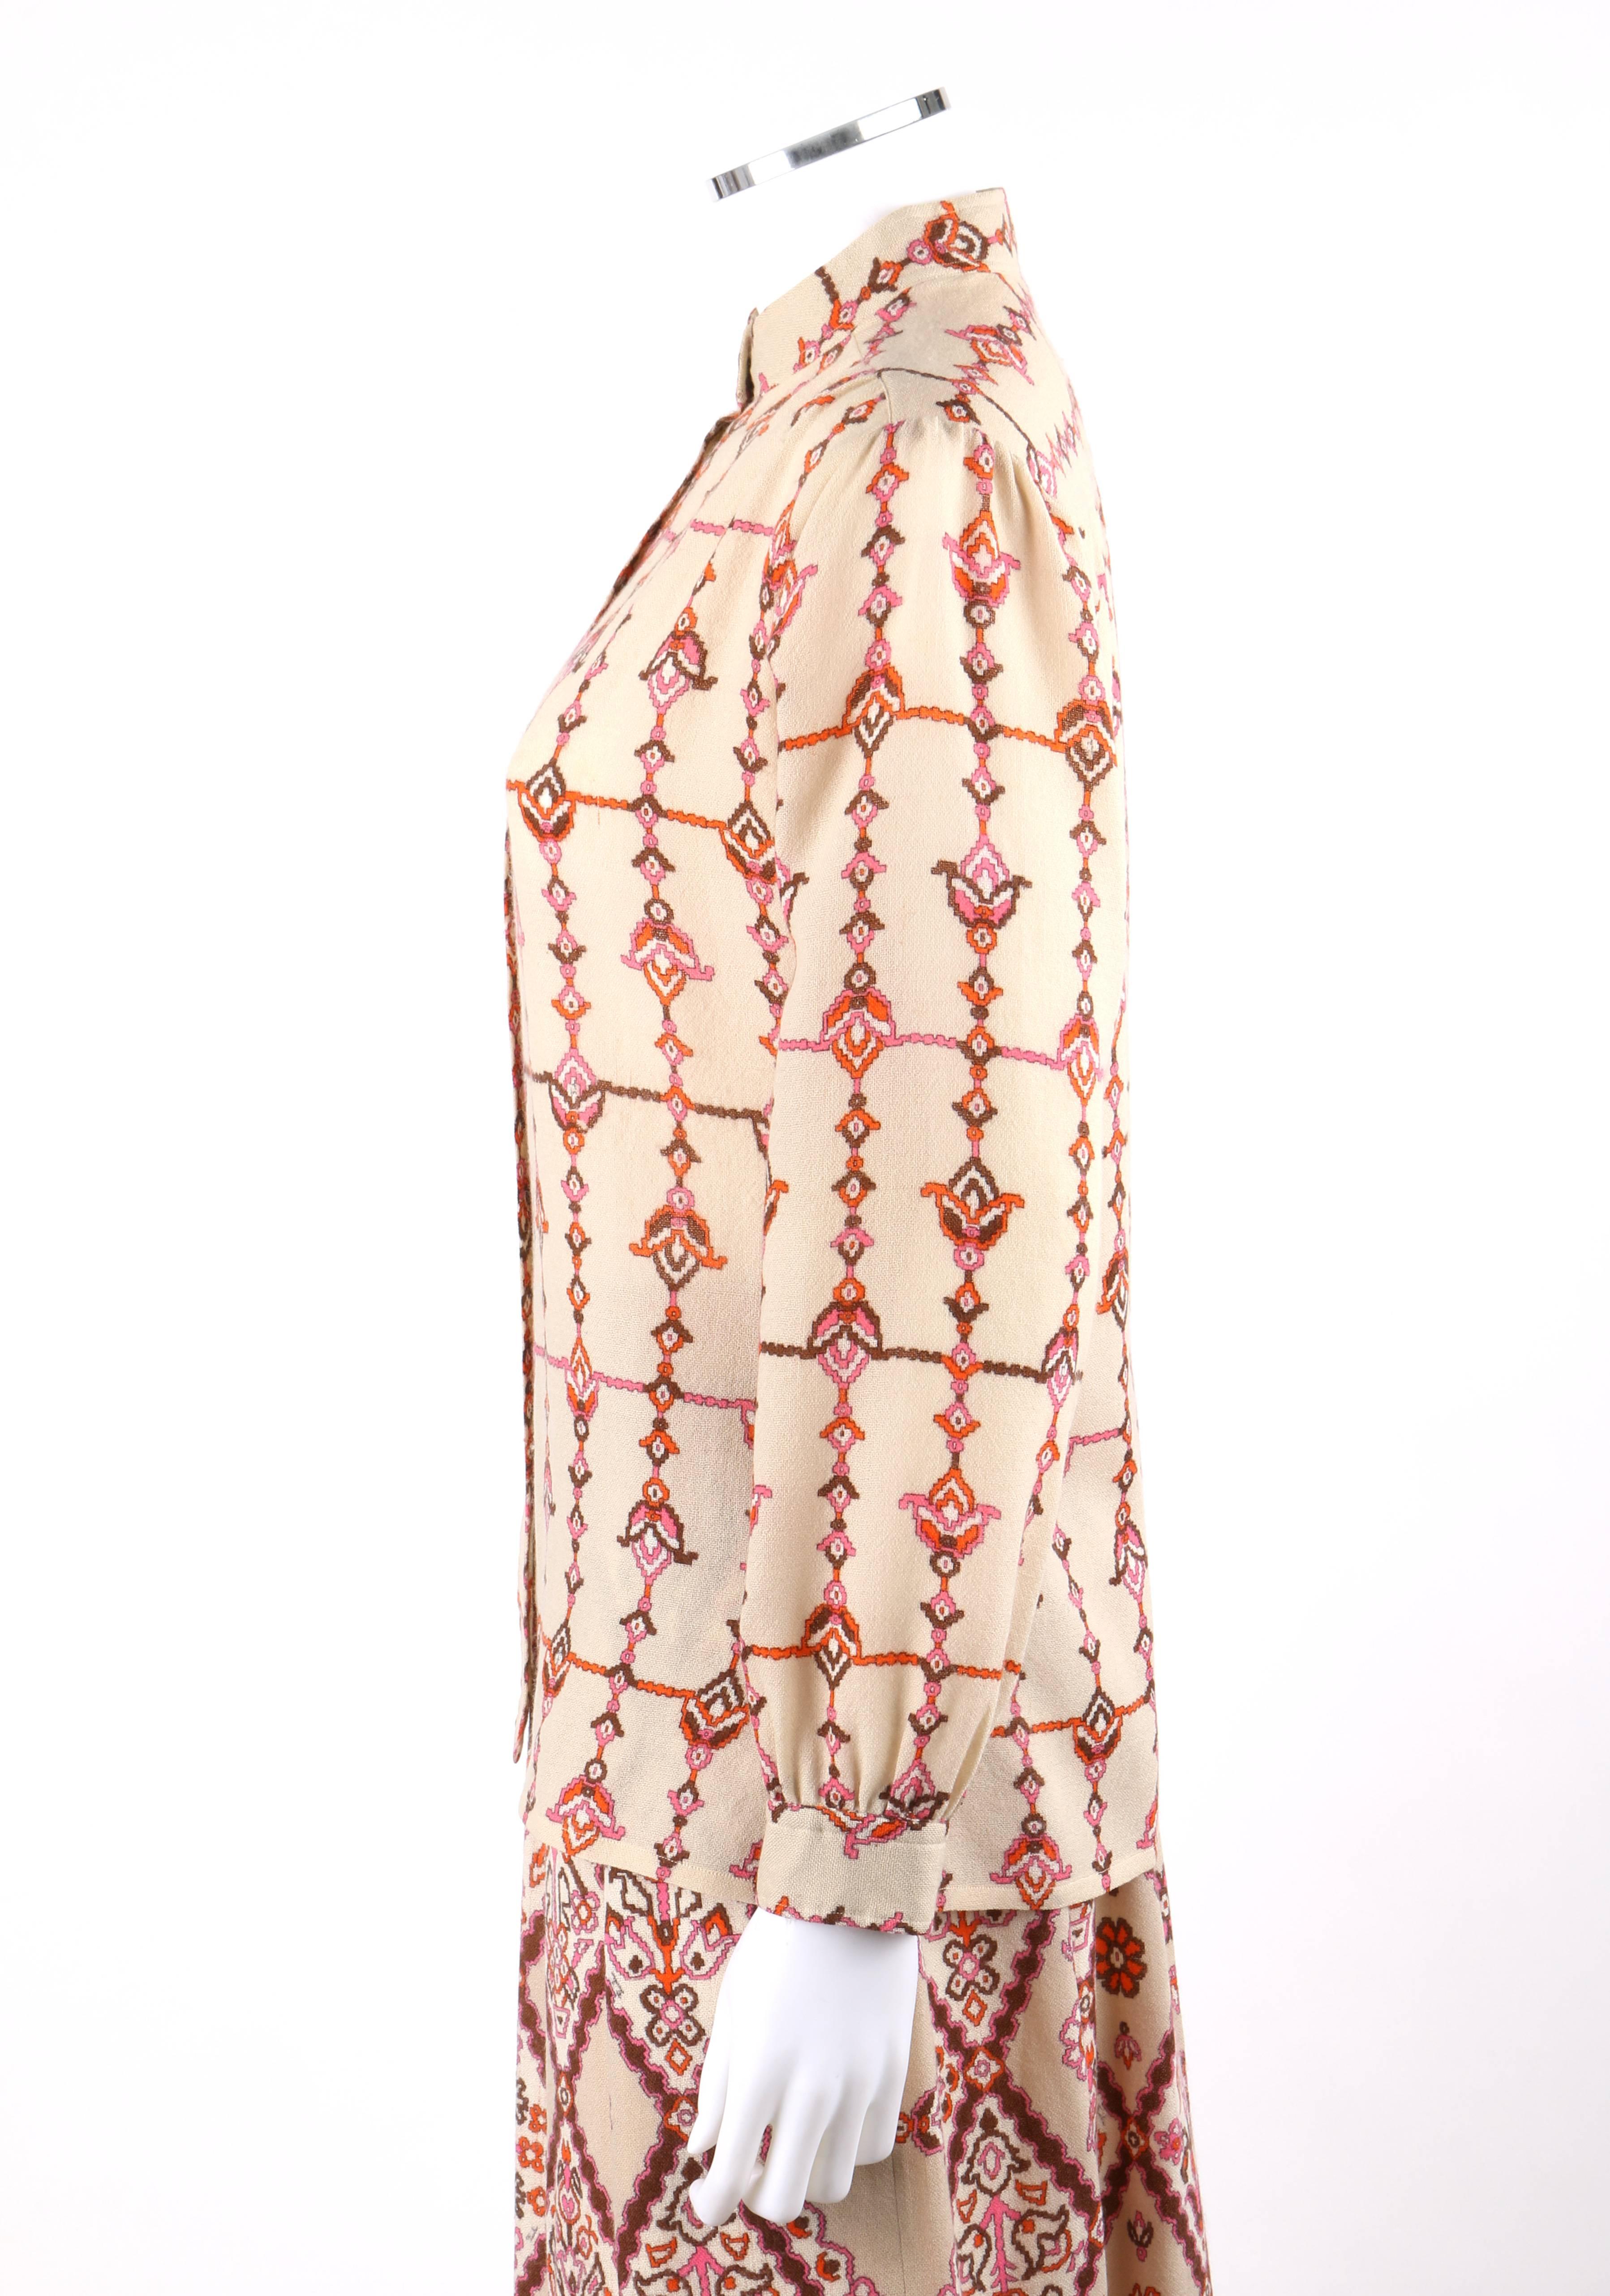 Emilio Pucci Signature Print Shirt Blouse Gathered Skirt Dress Set, circa 1950s For Sale 2